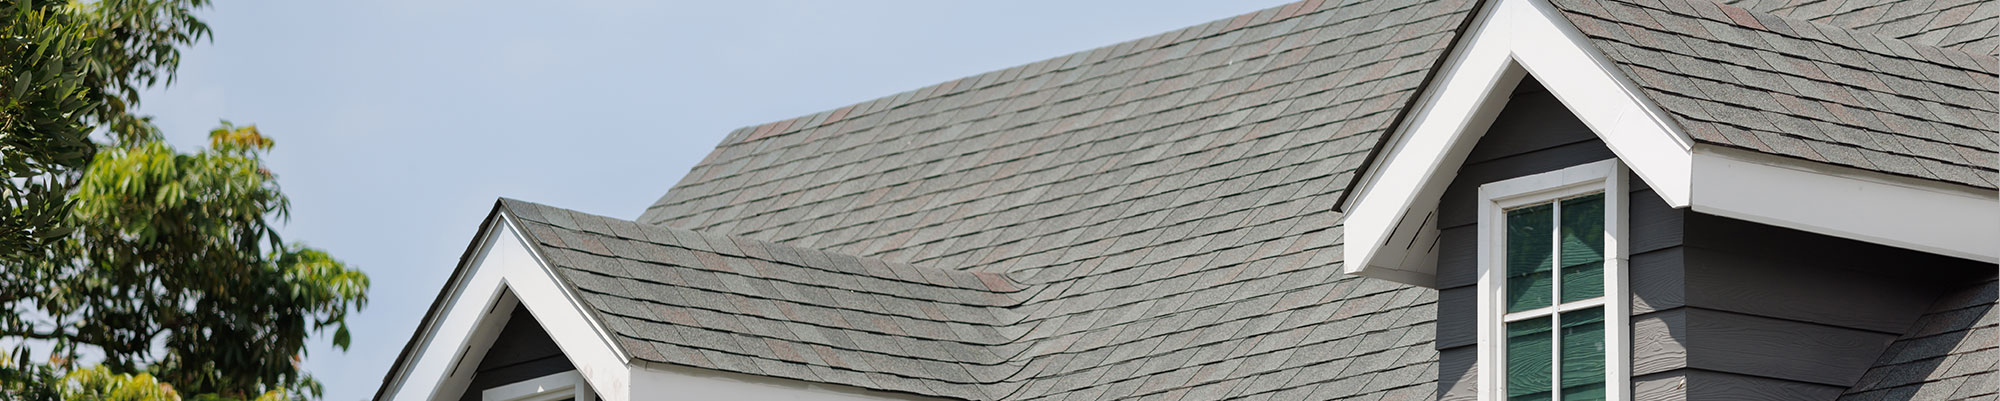 Burlington roof replacement company